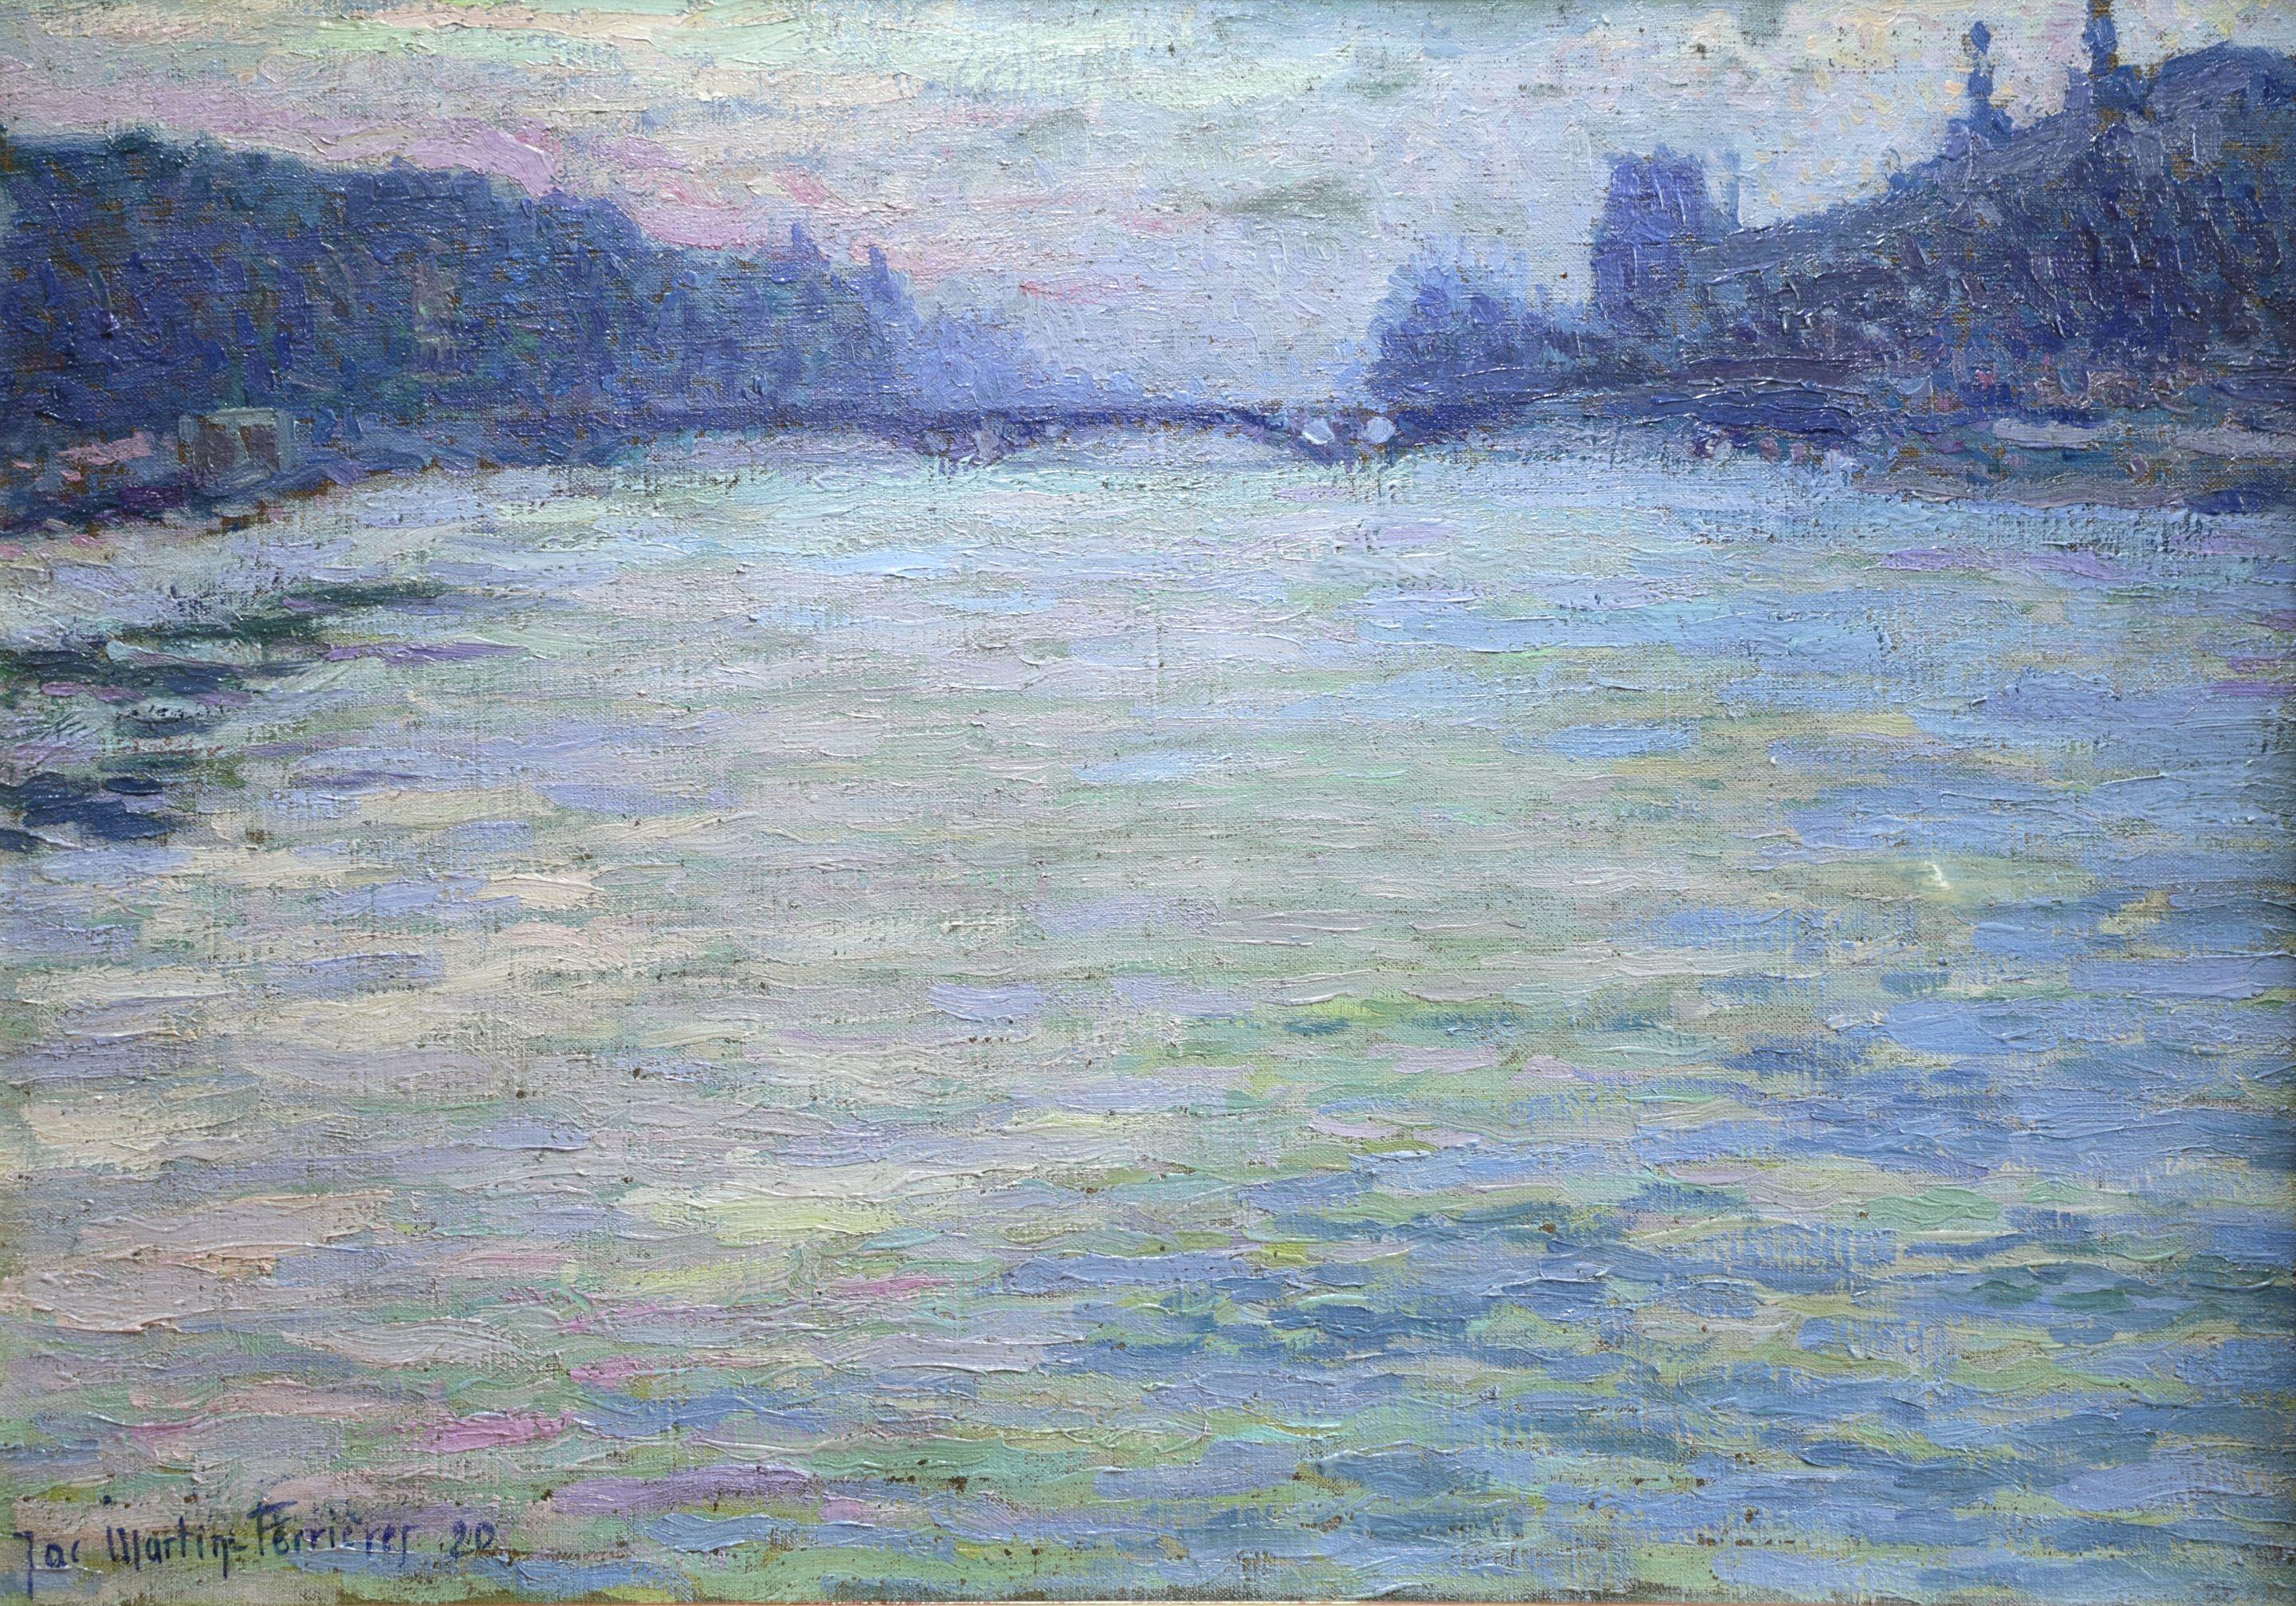 Jacques Martin-Ferrières Landscape Painting - Paris-La Seine - Early 20th Century Oil, French, Riverscape by Martin-Ferrieres